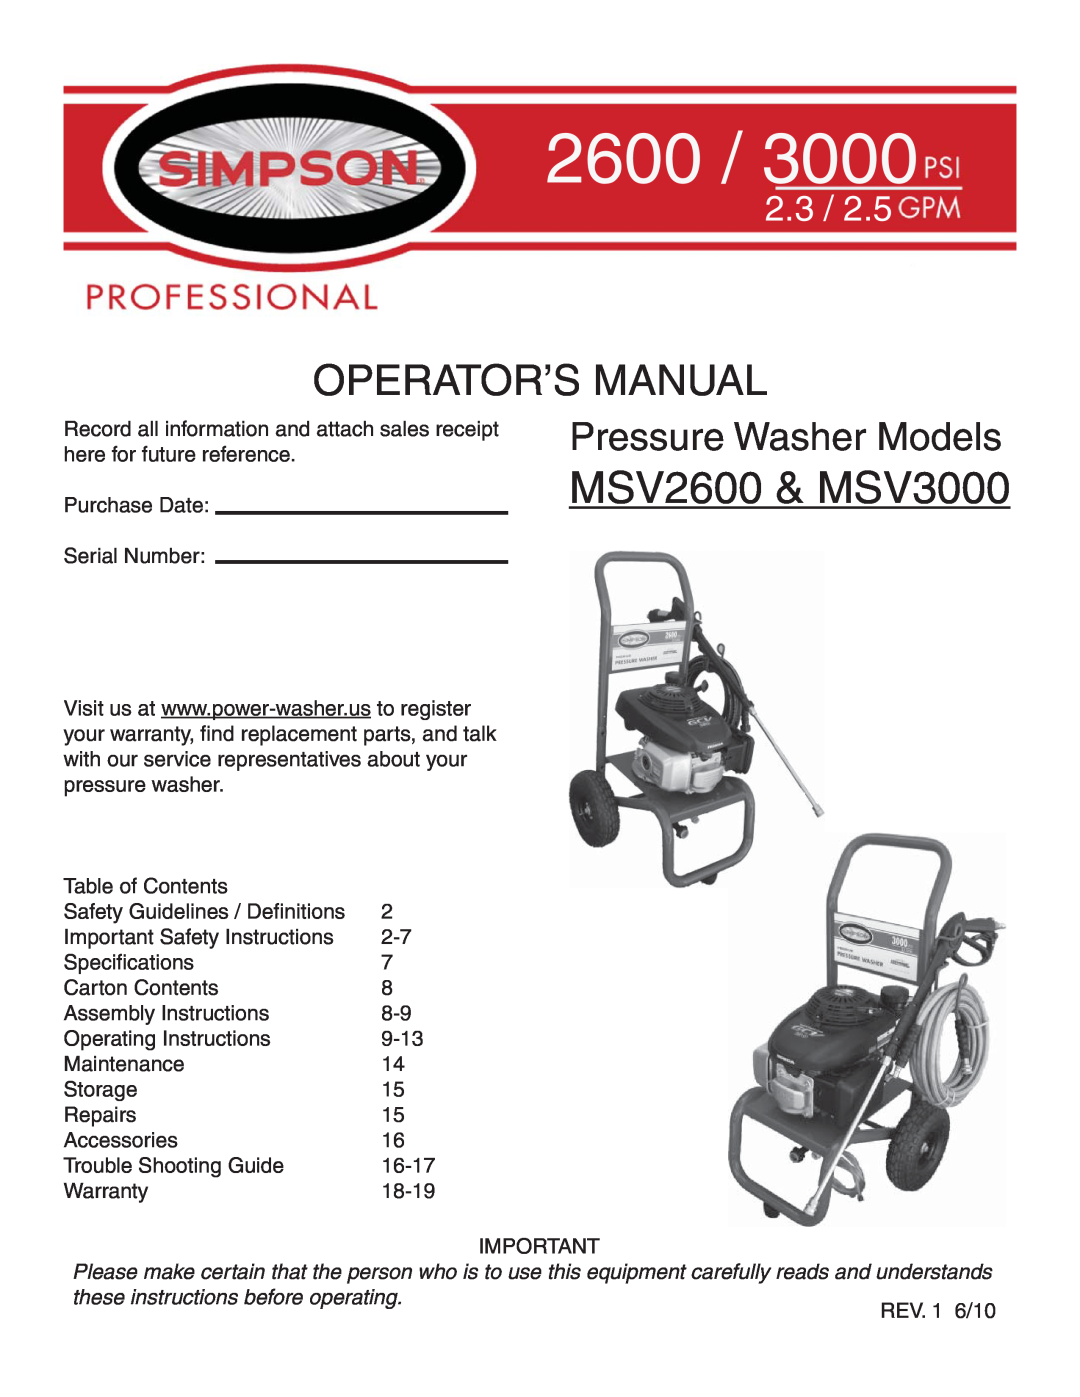 Simpson warranty MSV2600 & MSV3000, Operator’S Manual, Pressure Washer Models, 2.3 